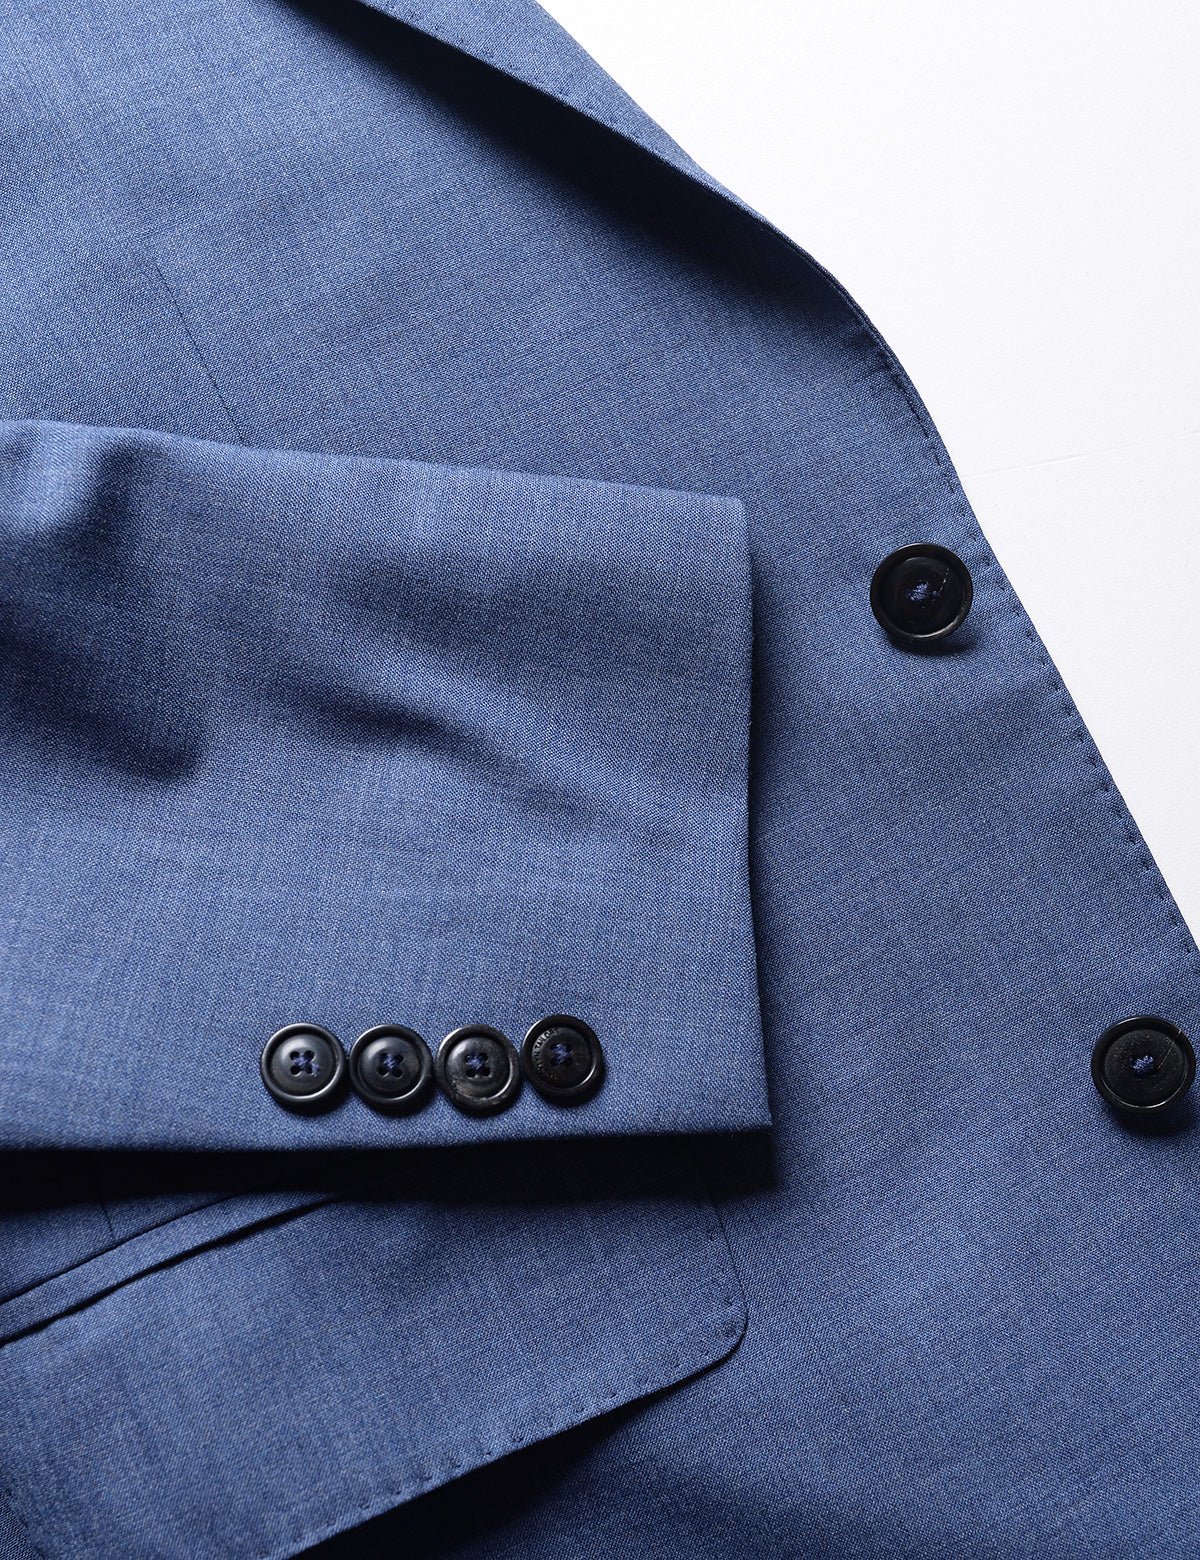 BKT50 Tailored Jacket in Heathered Wool - San Marino Blue